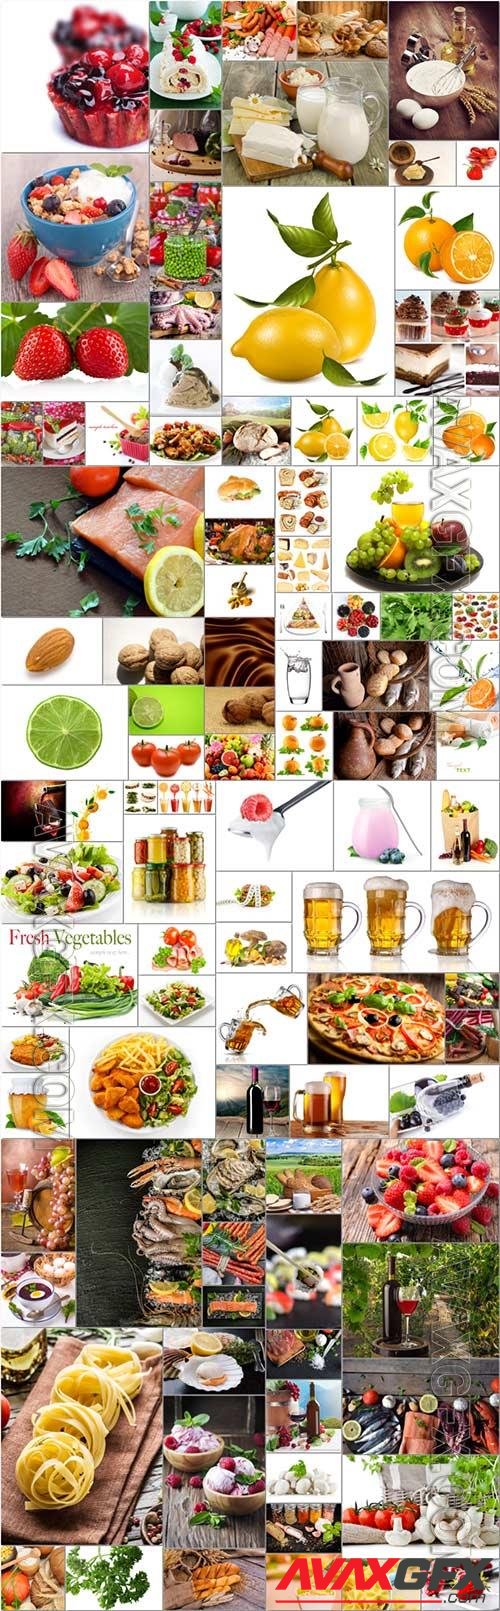 Food, meat, vegetables, fruits, fish, stock photo bundle vol 5